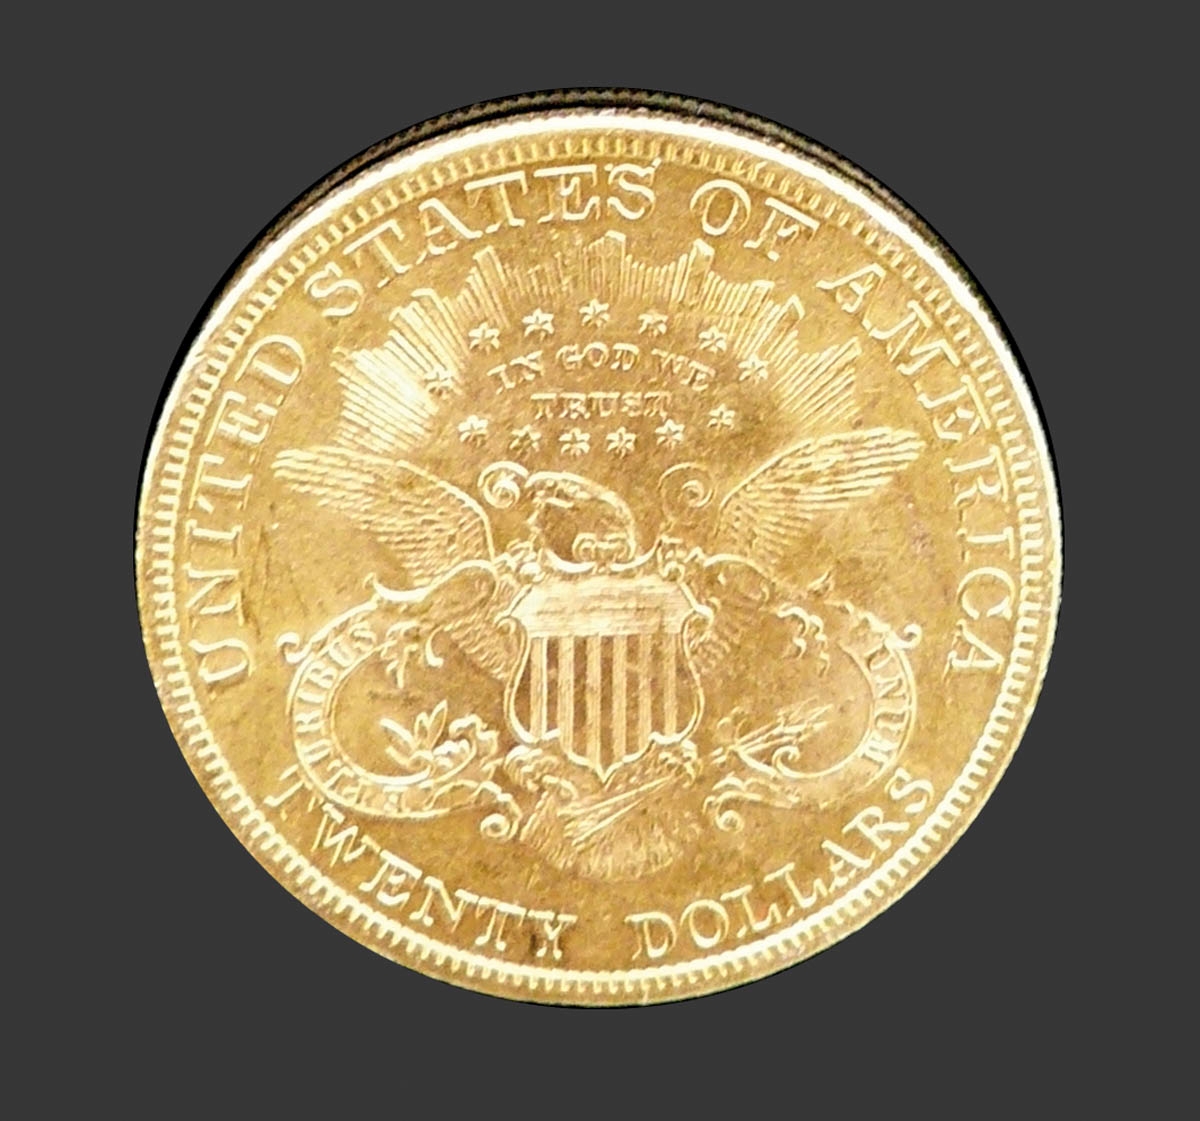 20 DollarUSA, 1895. 900er GG. D. 34 mm. Gew. 33,43 g. SS. Vs. Liberty mit Jahreszahl. Rs. Adler - Image 2 of 2